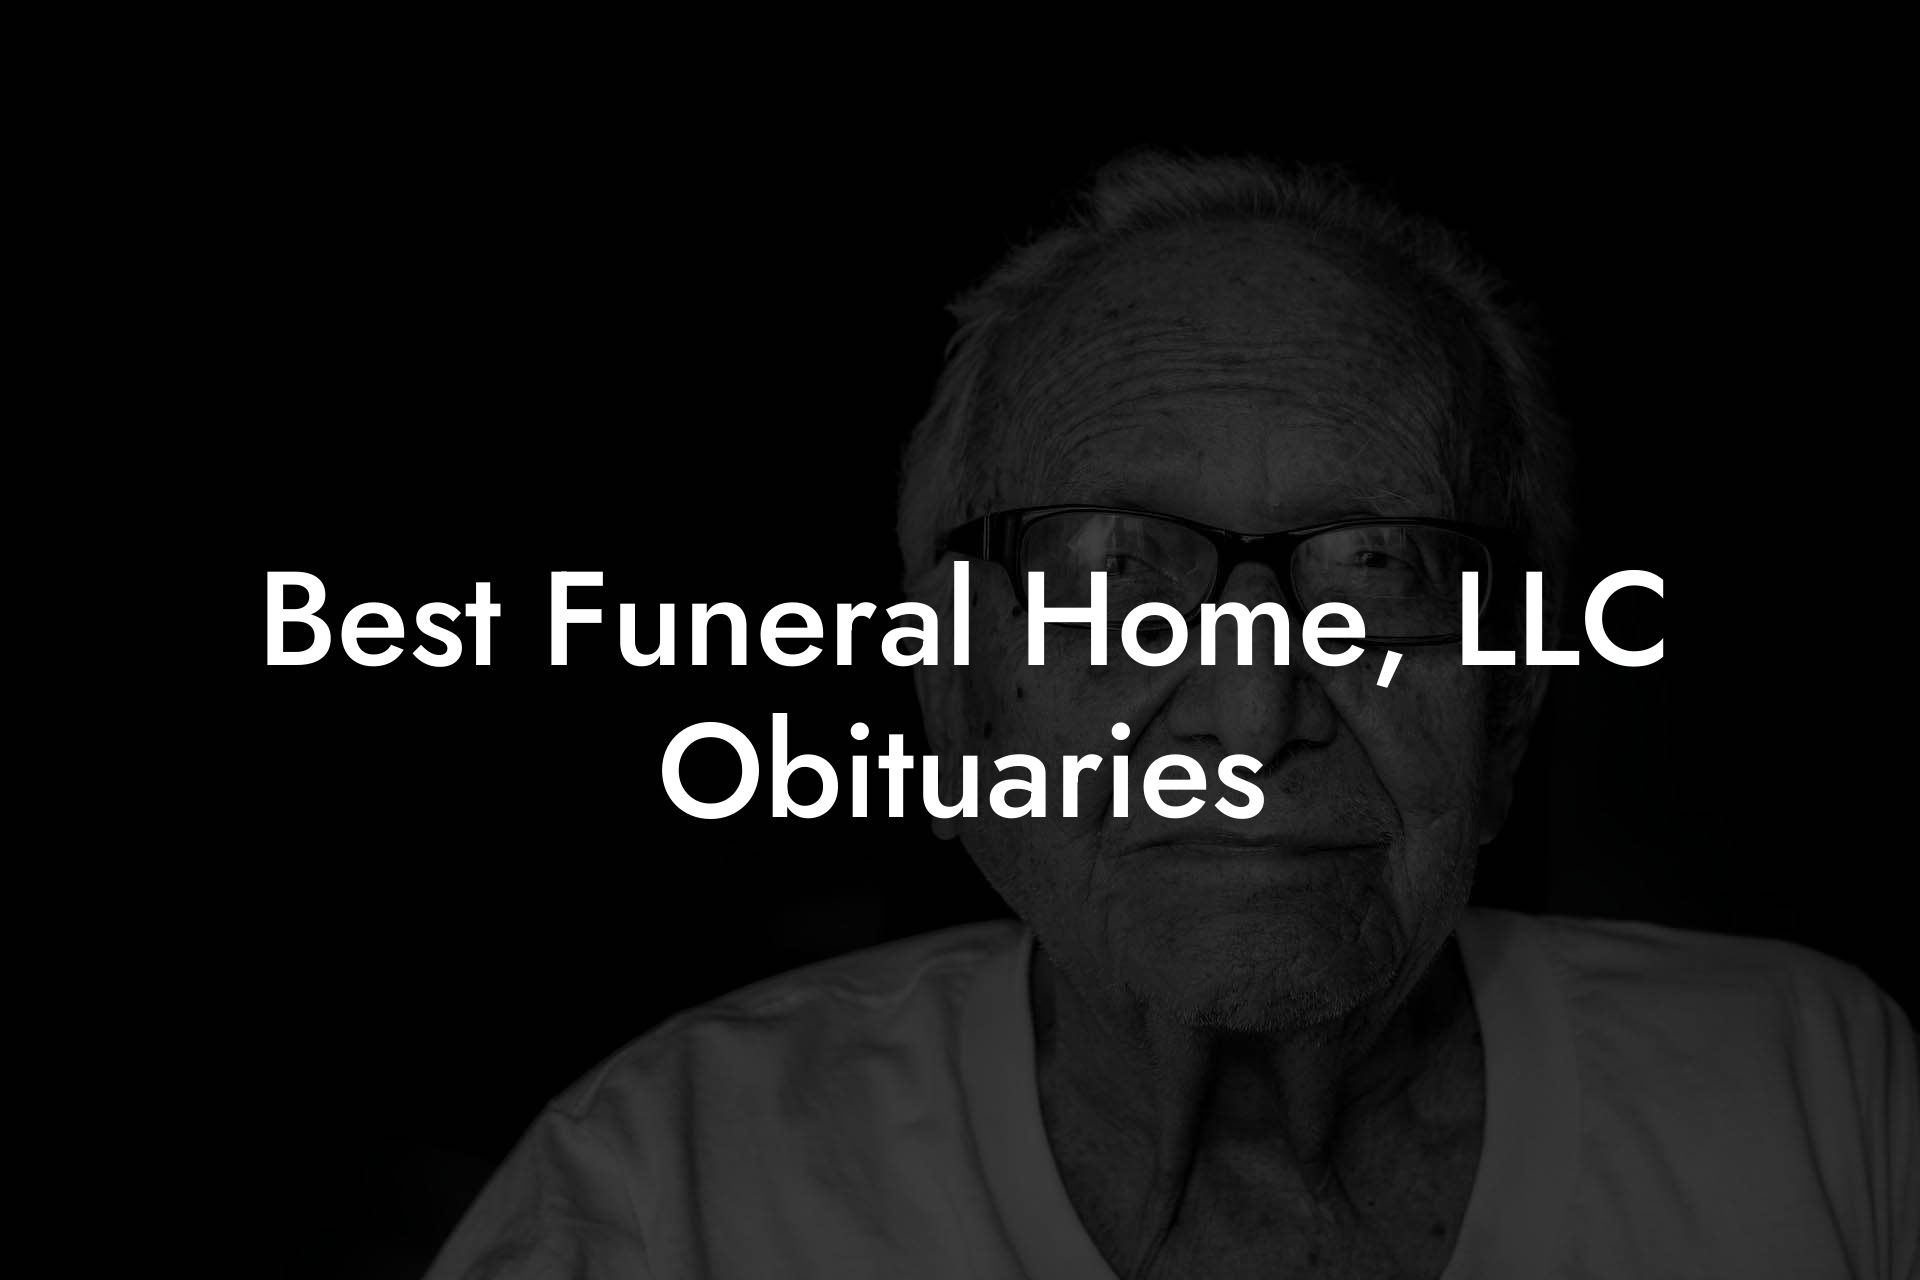 Best Funeral Home, LLC Obituaries